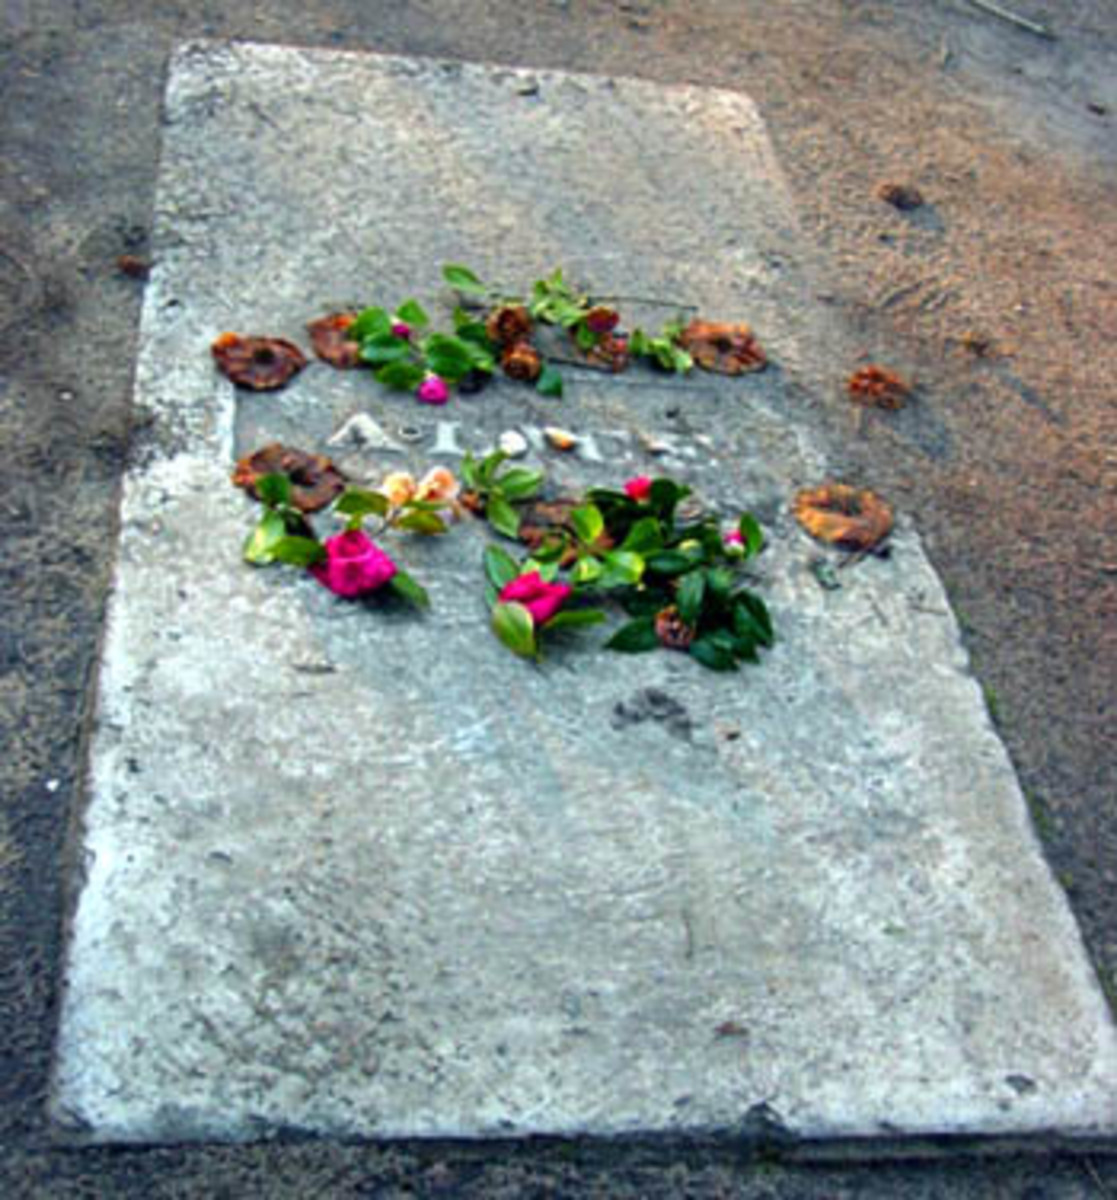 The gravestone of Alice Flagg